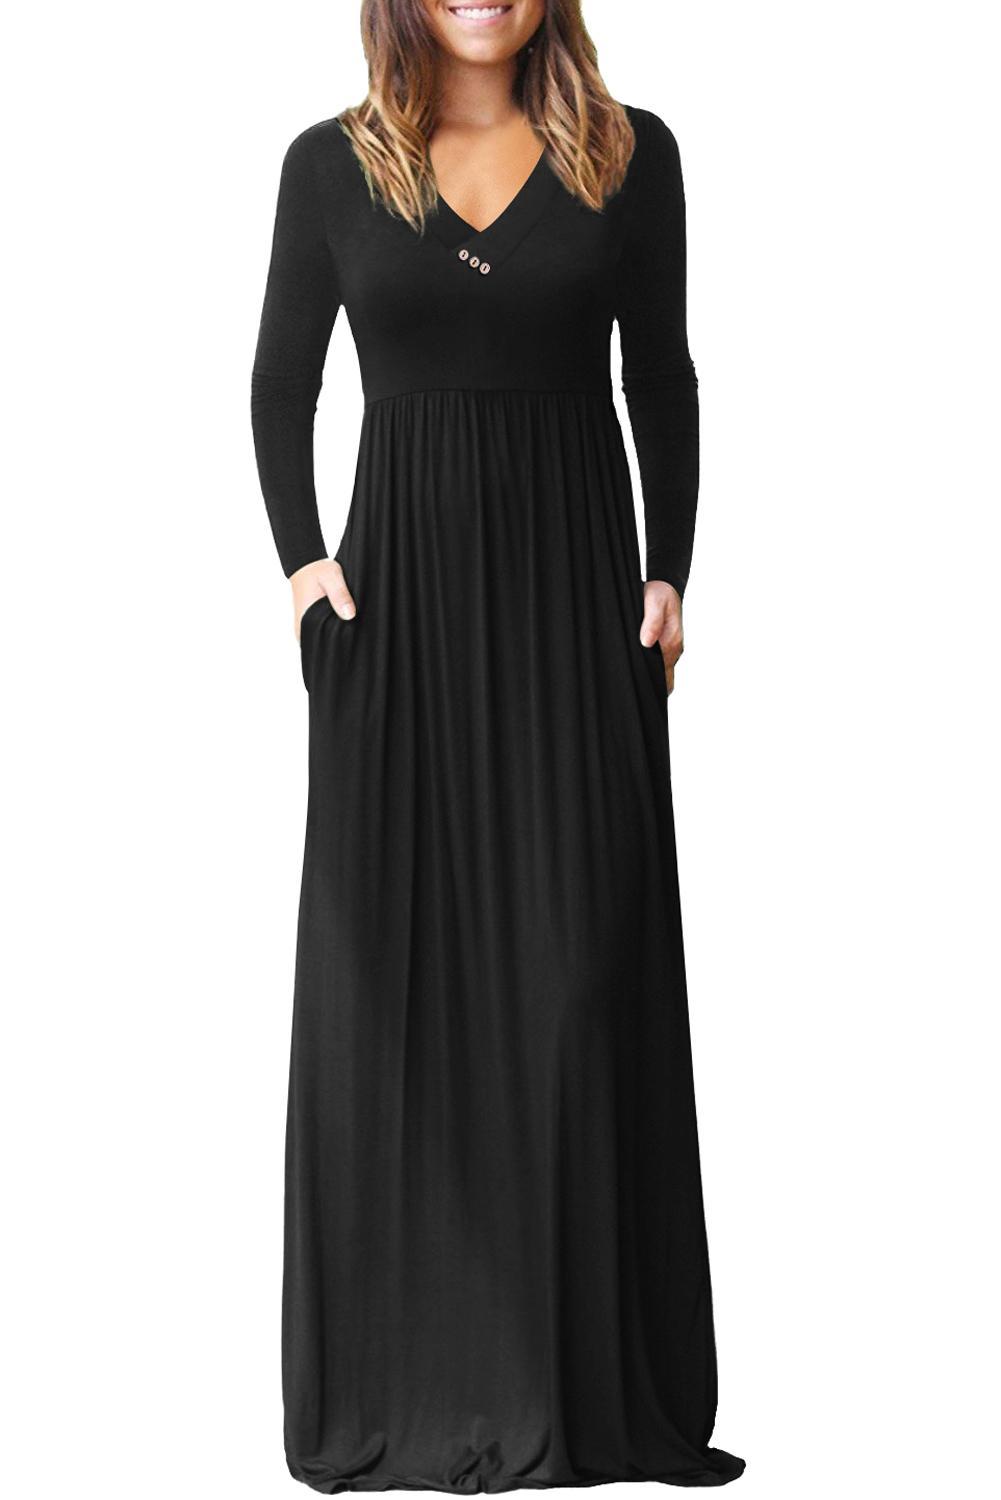 Plus Size So Chic - Black V Neck Pocket Style Long Dress